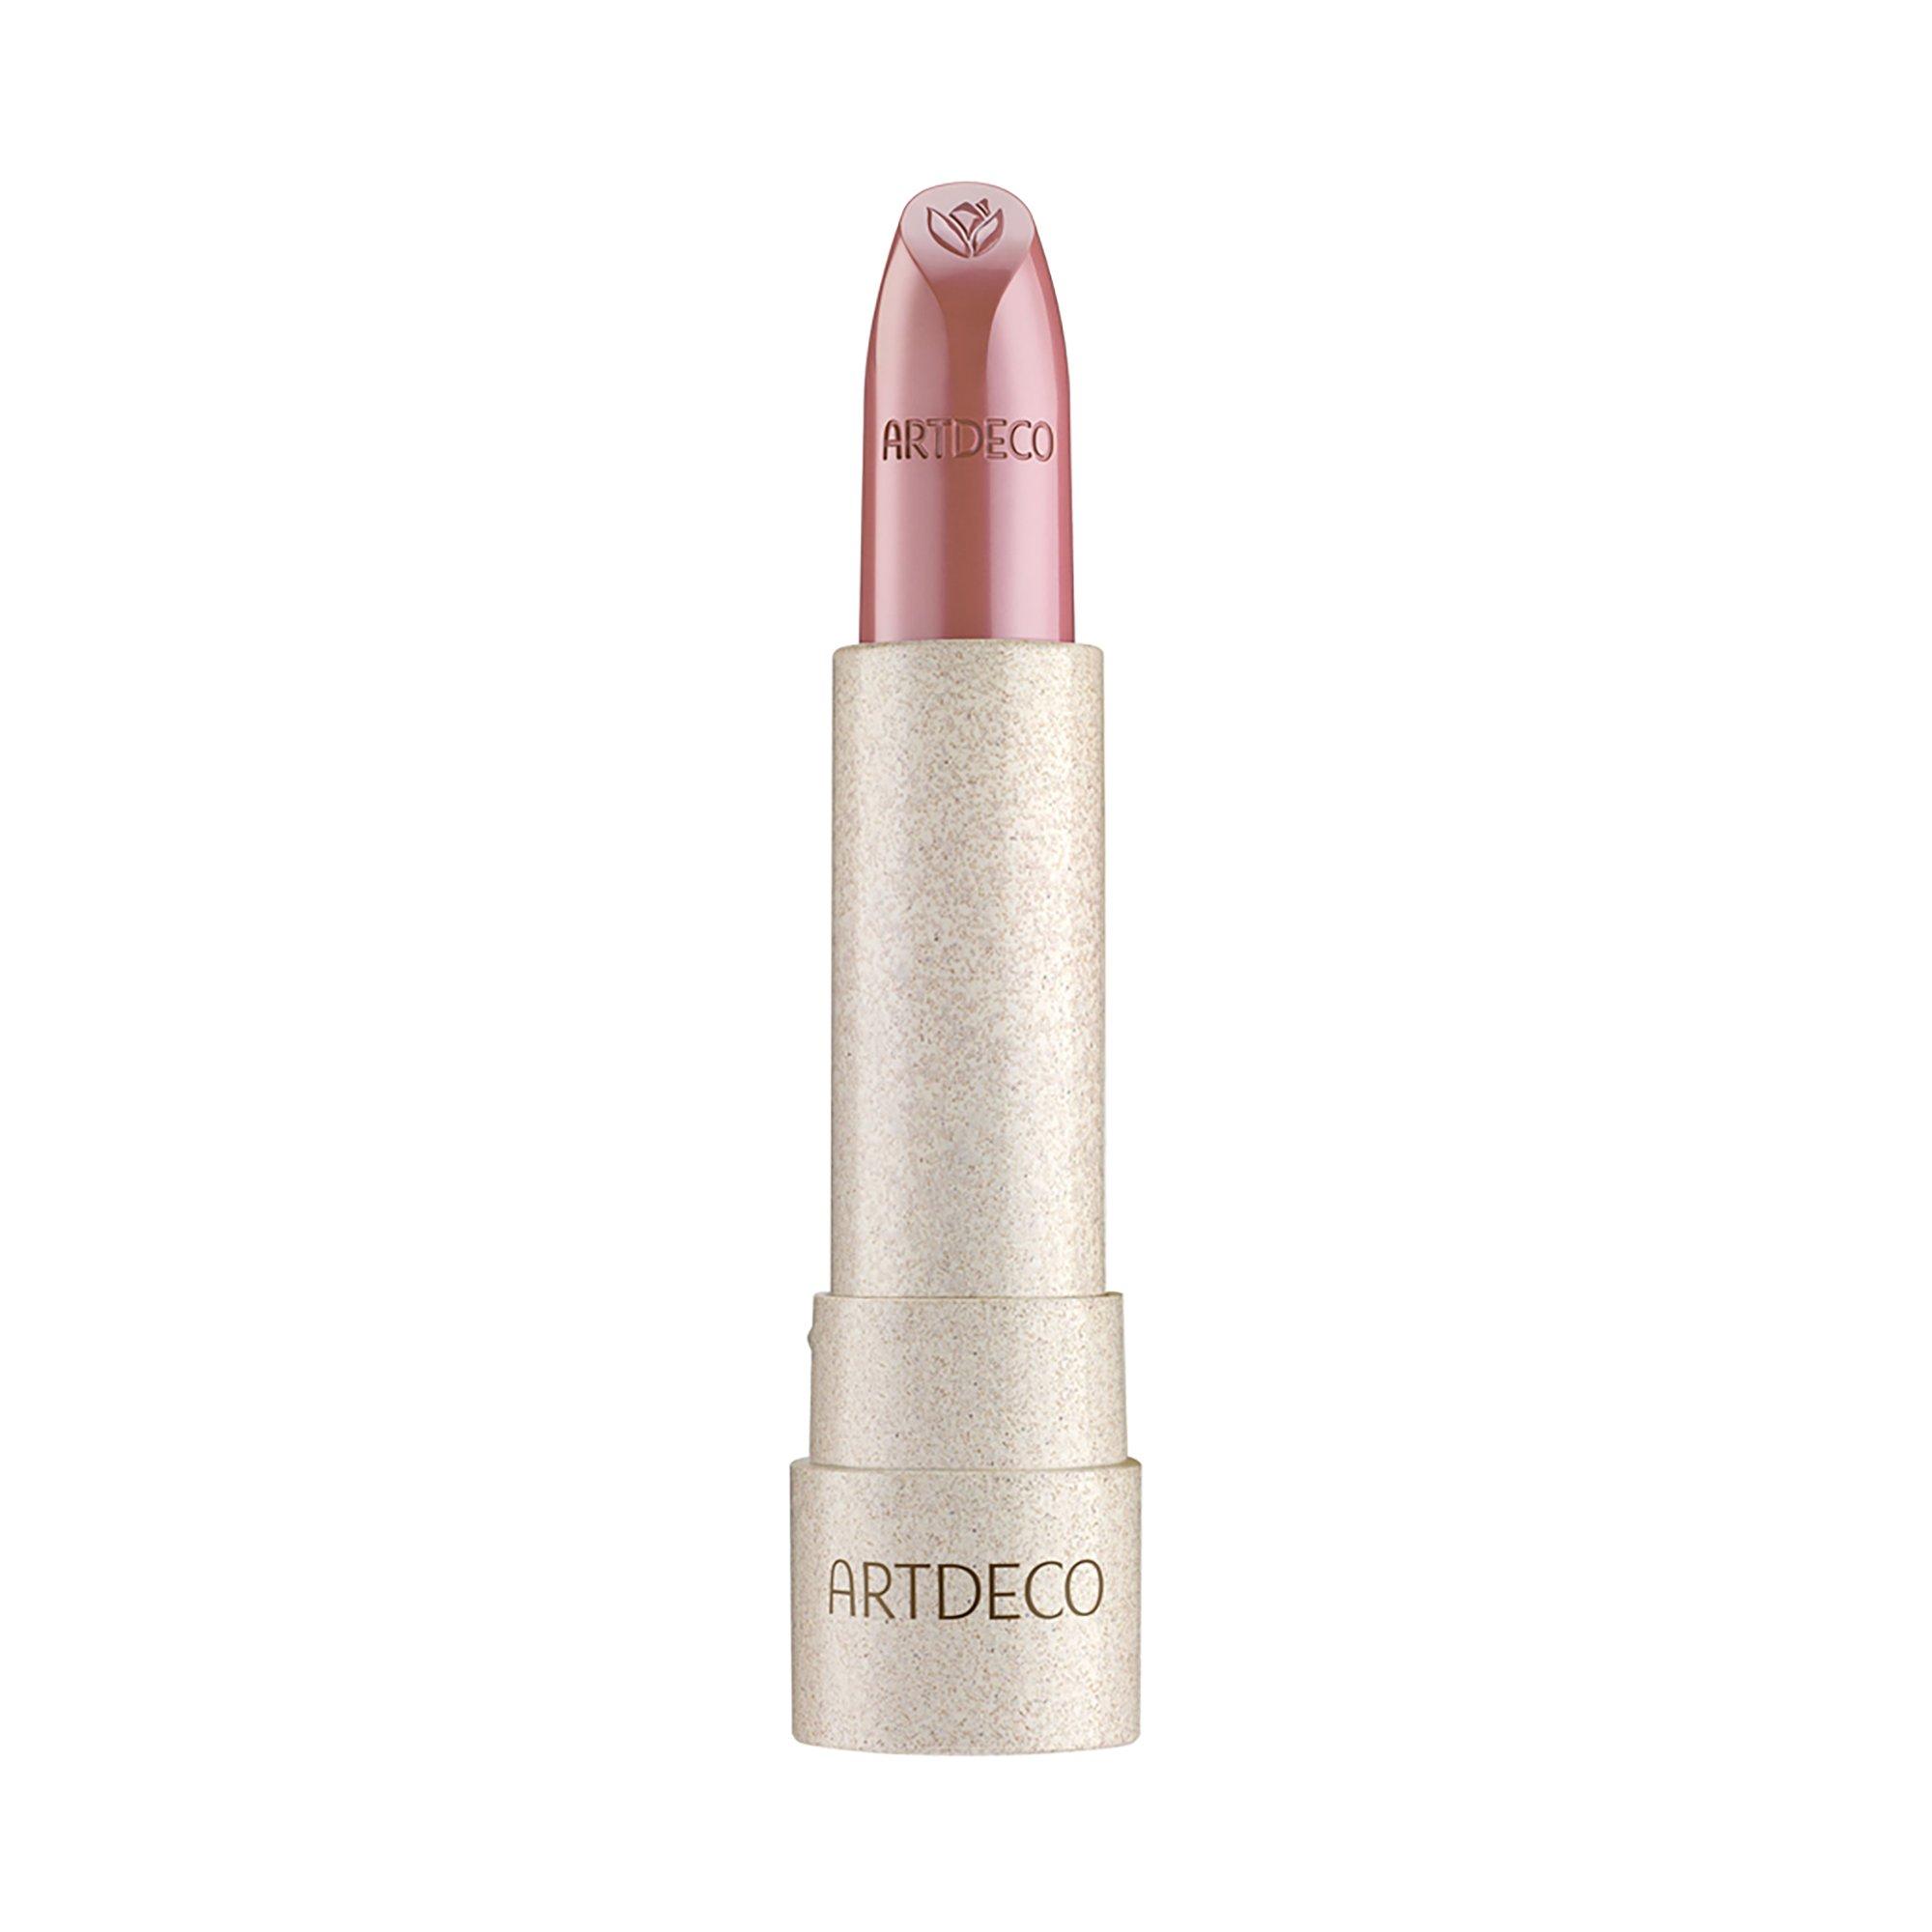 Image of ARTDECO Natural Natural Cream Lipstick - 4g